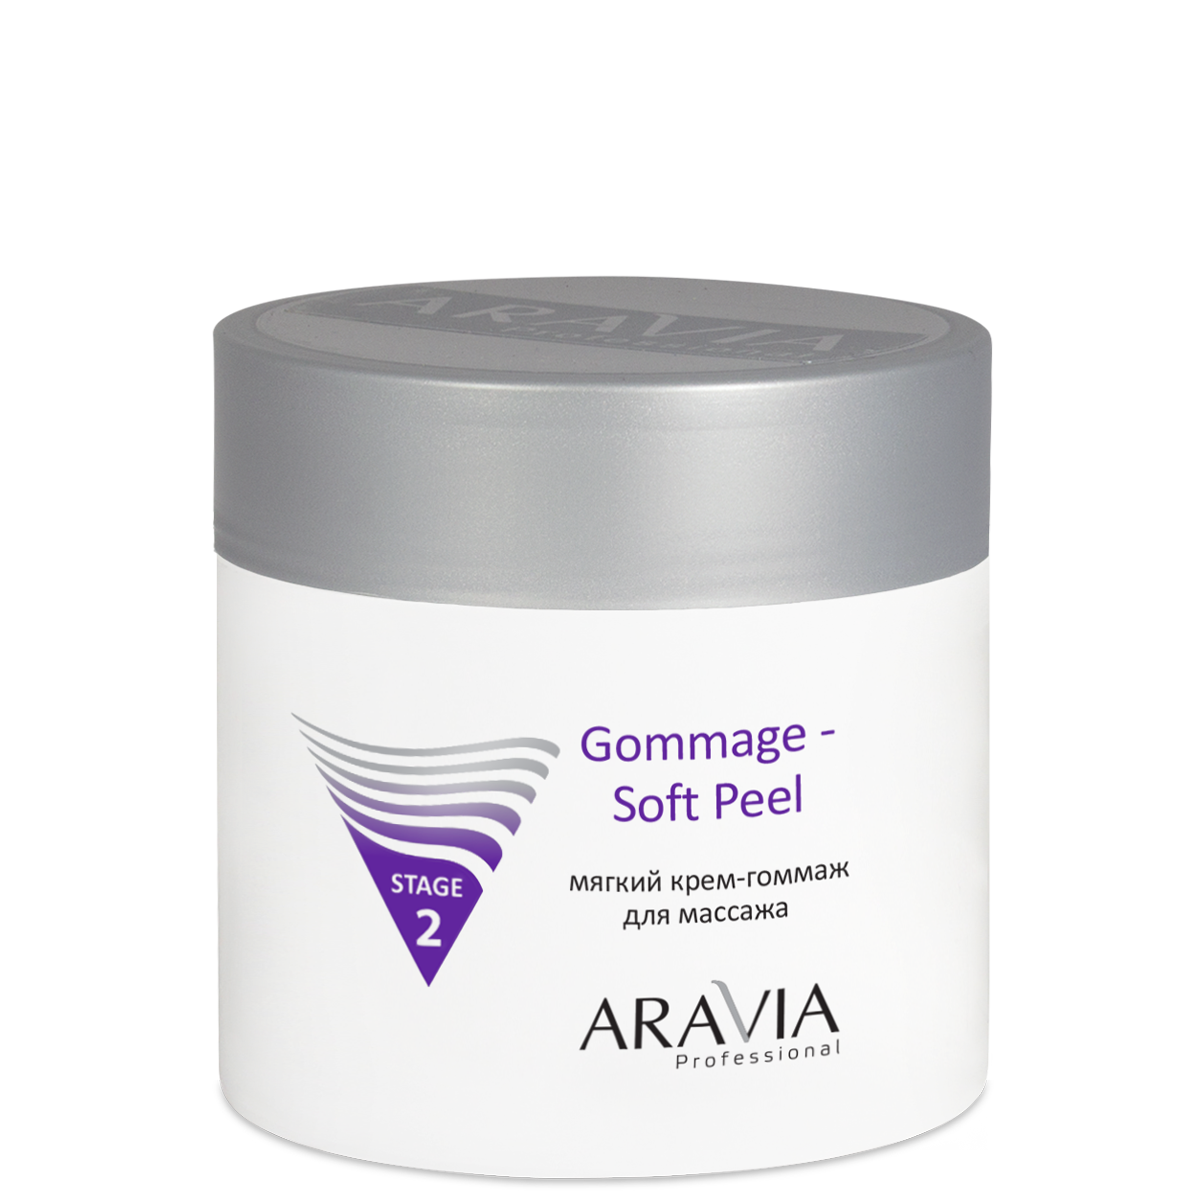 ARAVIA Крем-гоммаж мягкий для массажа / Gommage - Soft Peel 300 мл